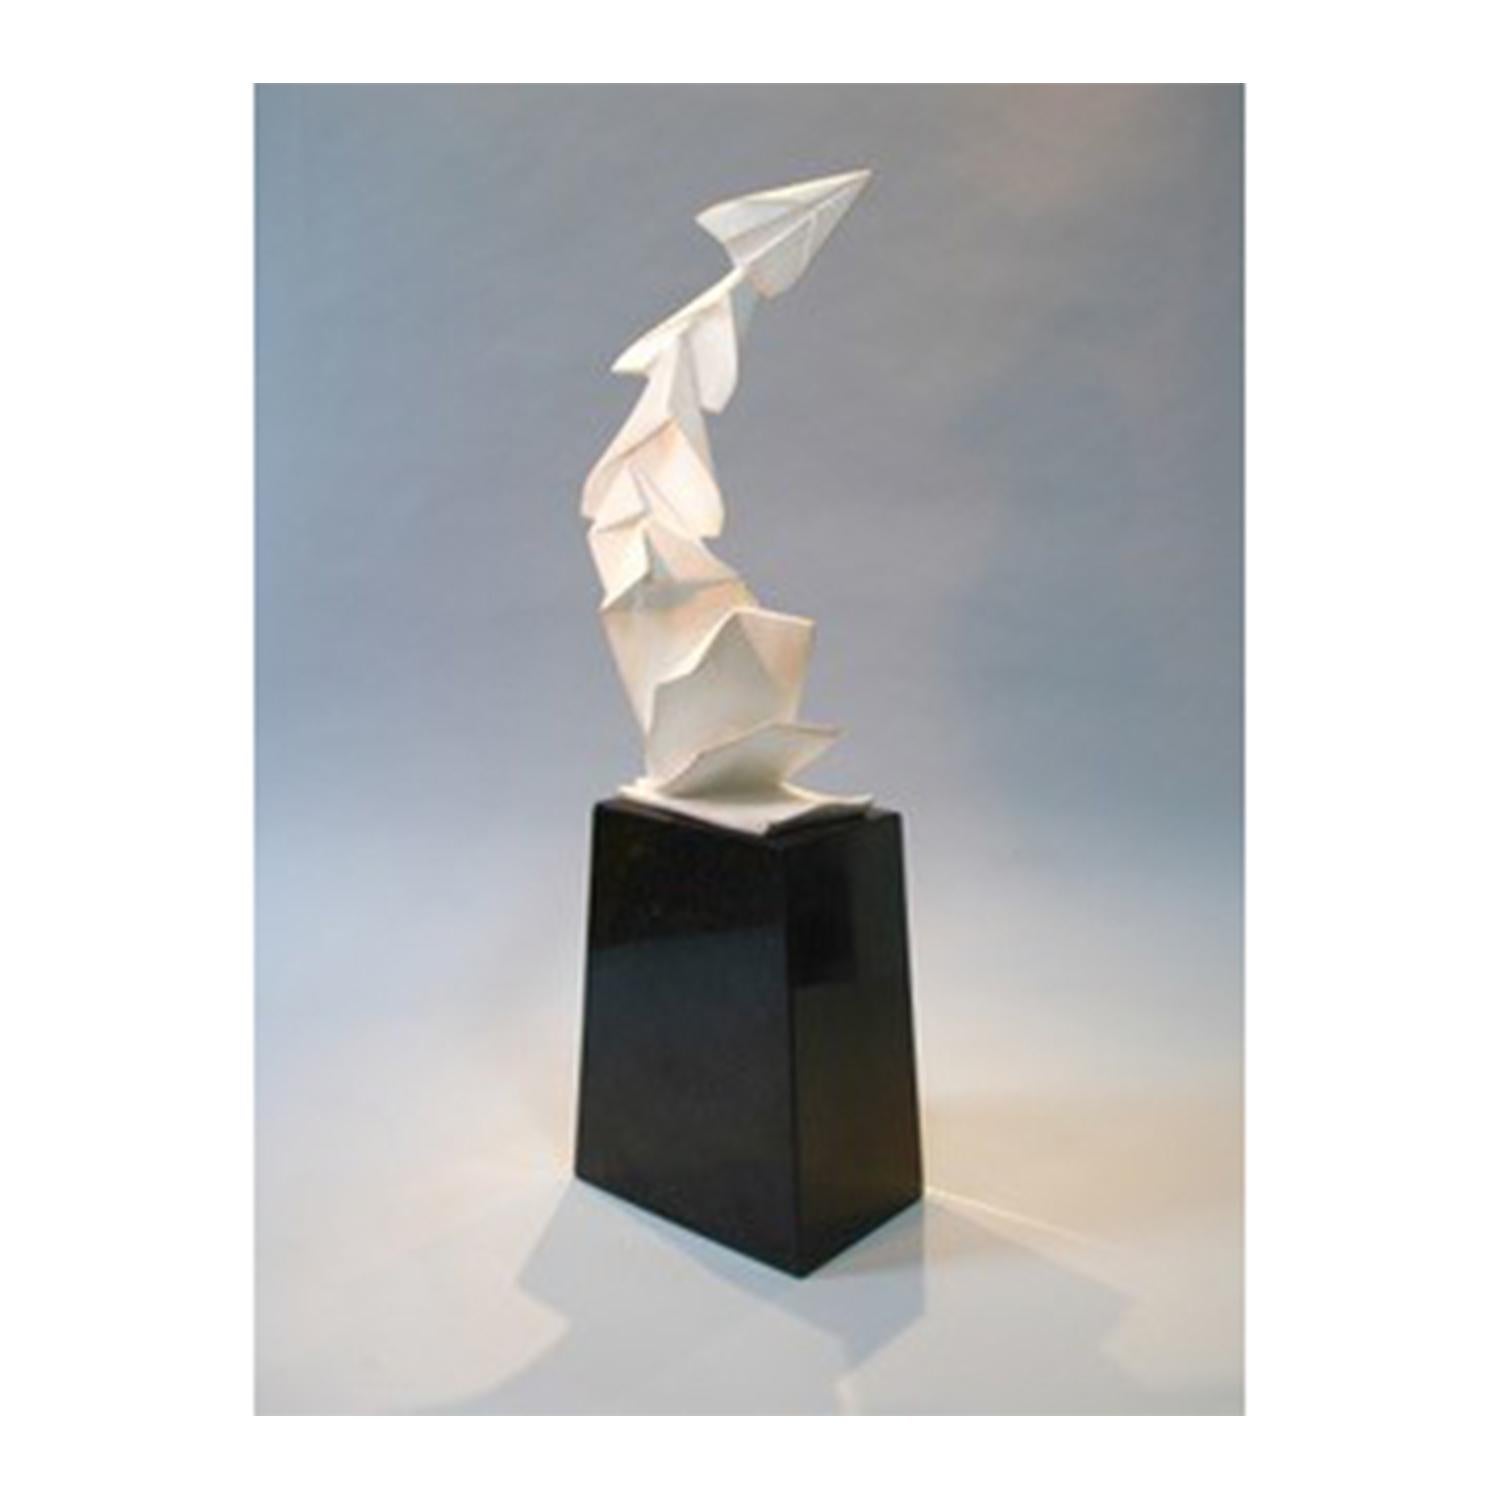 Kevin Box Figurative Sculpture - Folding Planes (Maquette) 23/50